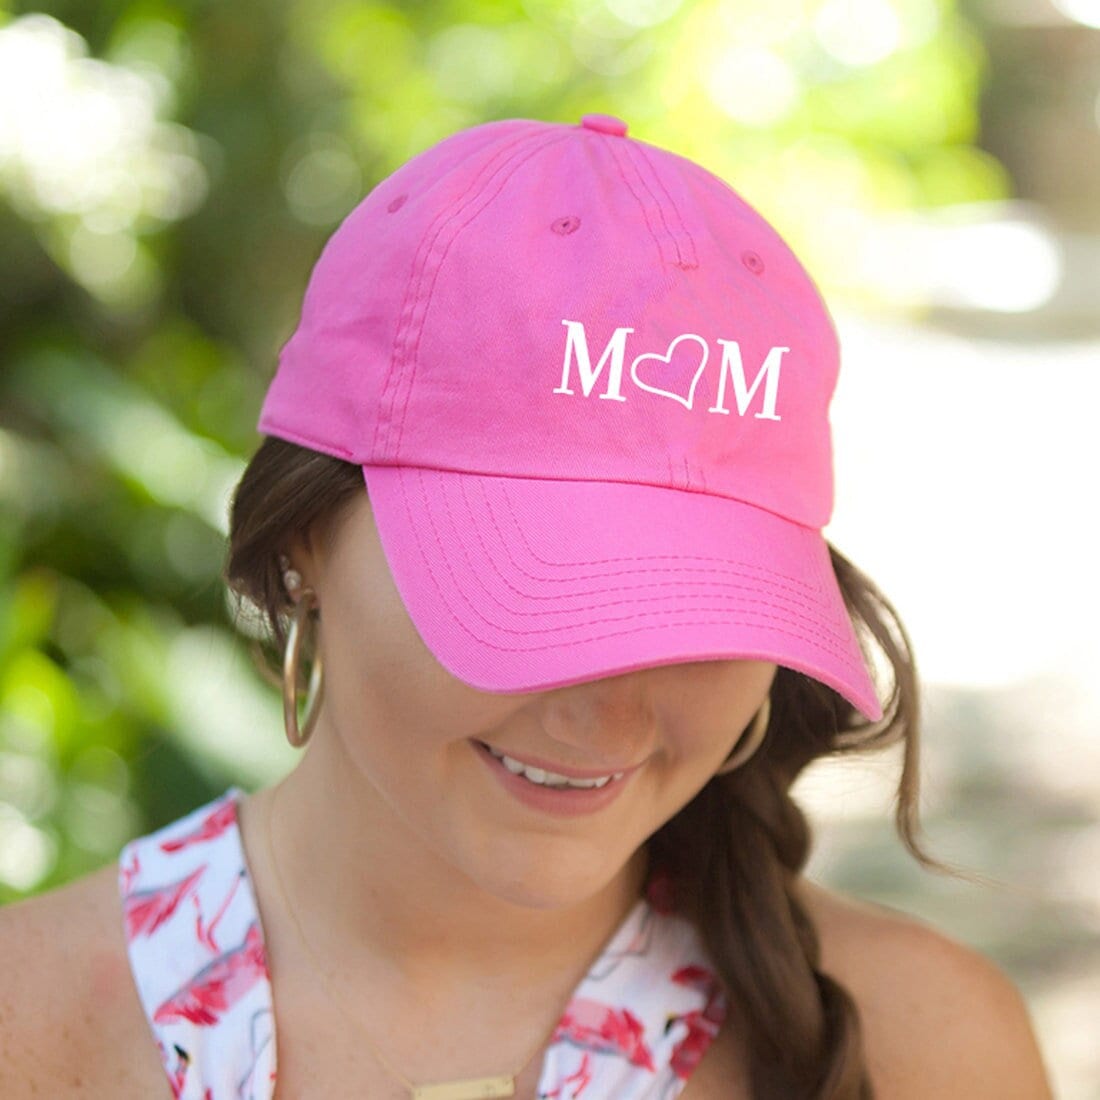 Mom Hot Pink Cap, Adult Cap, Hot Pink, Cute Hat, Baseball Cap